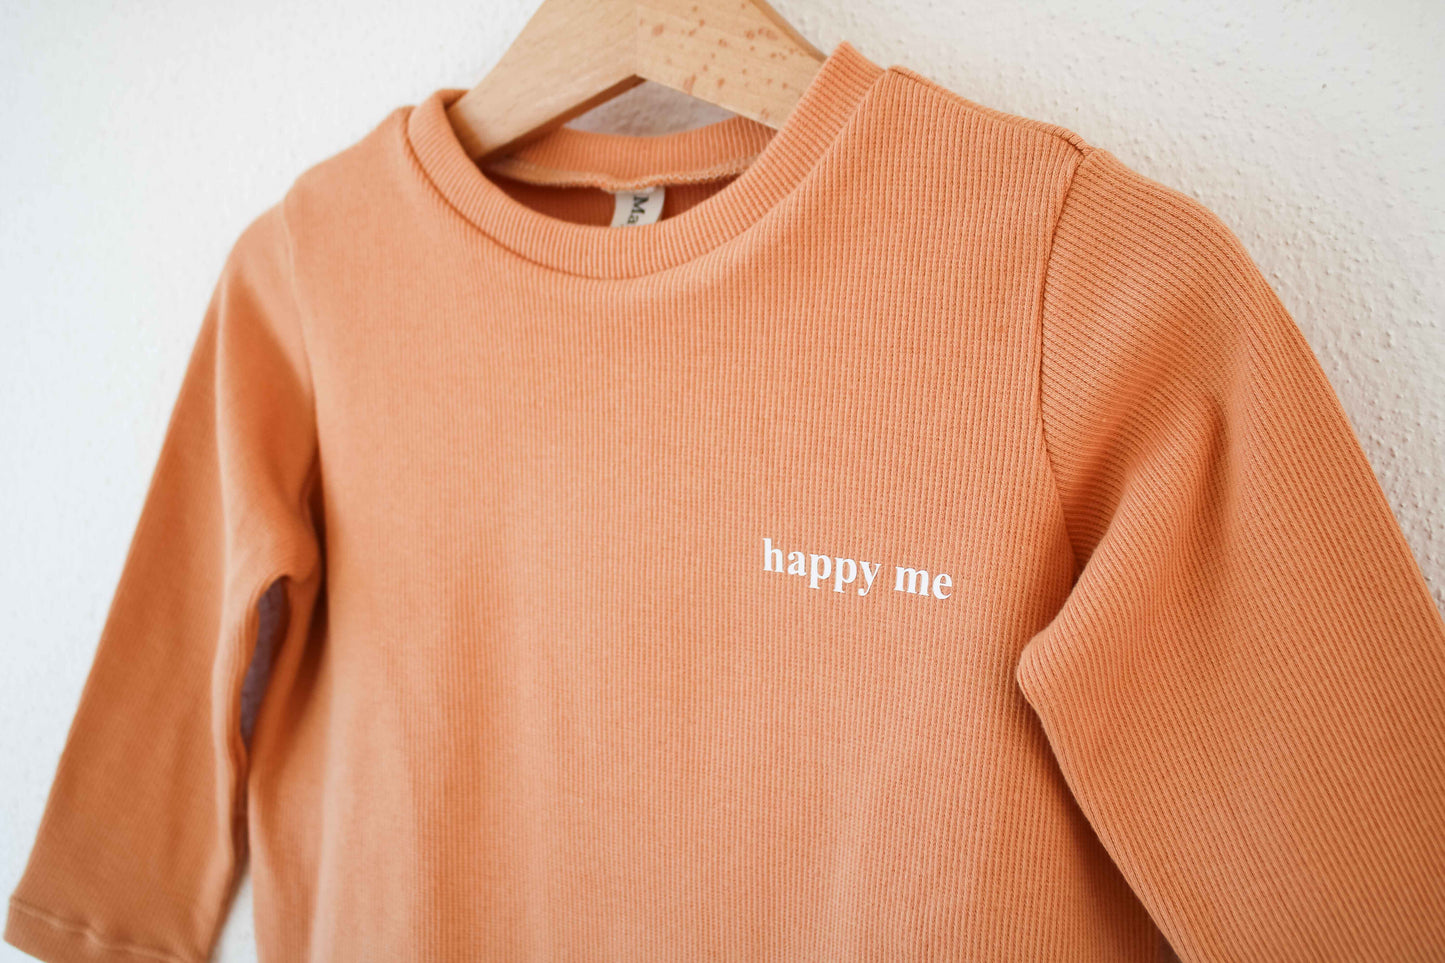 Langarmshirt "Happy Me" (Rost)